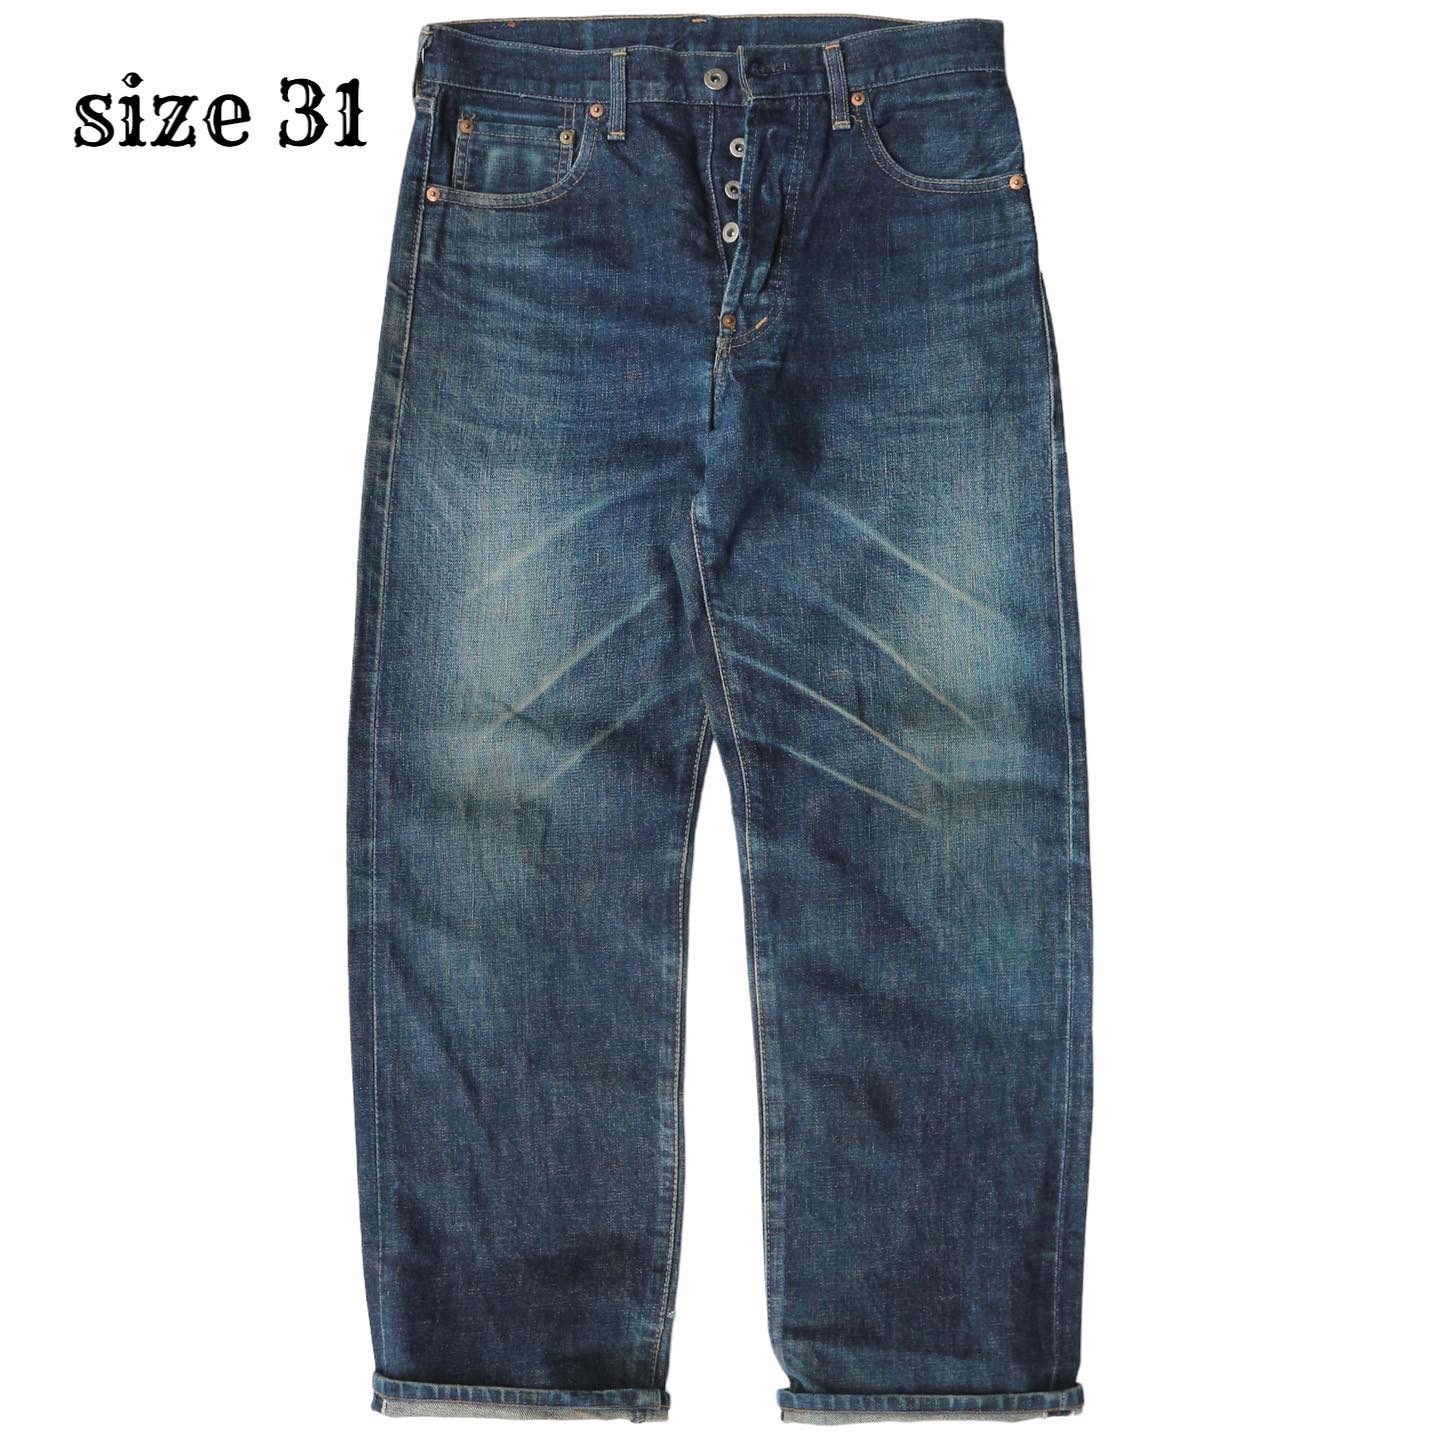 90s LEVI'S 702 Denim Jeans Size 31 denimister